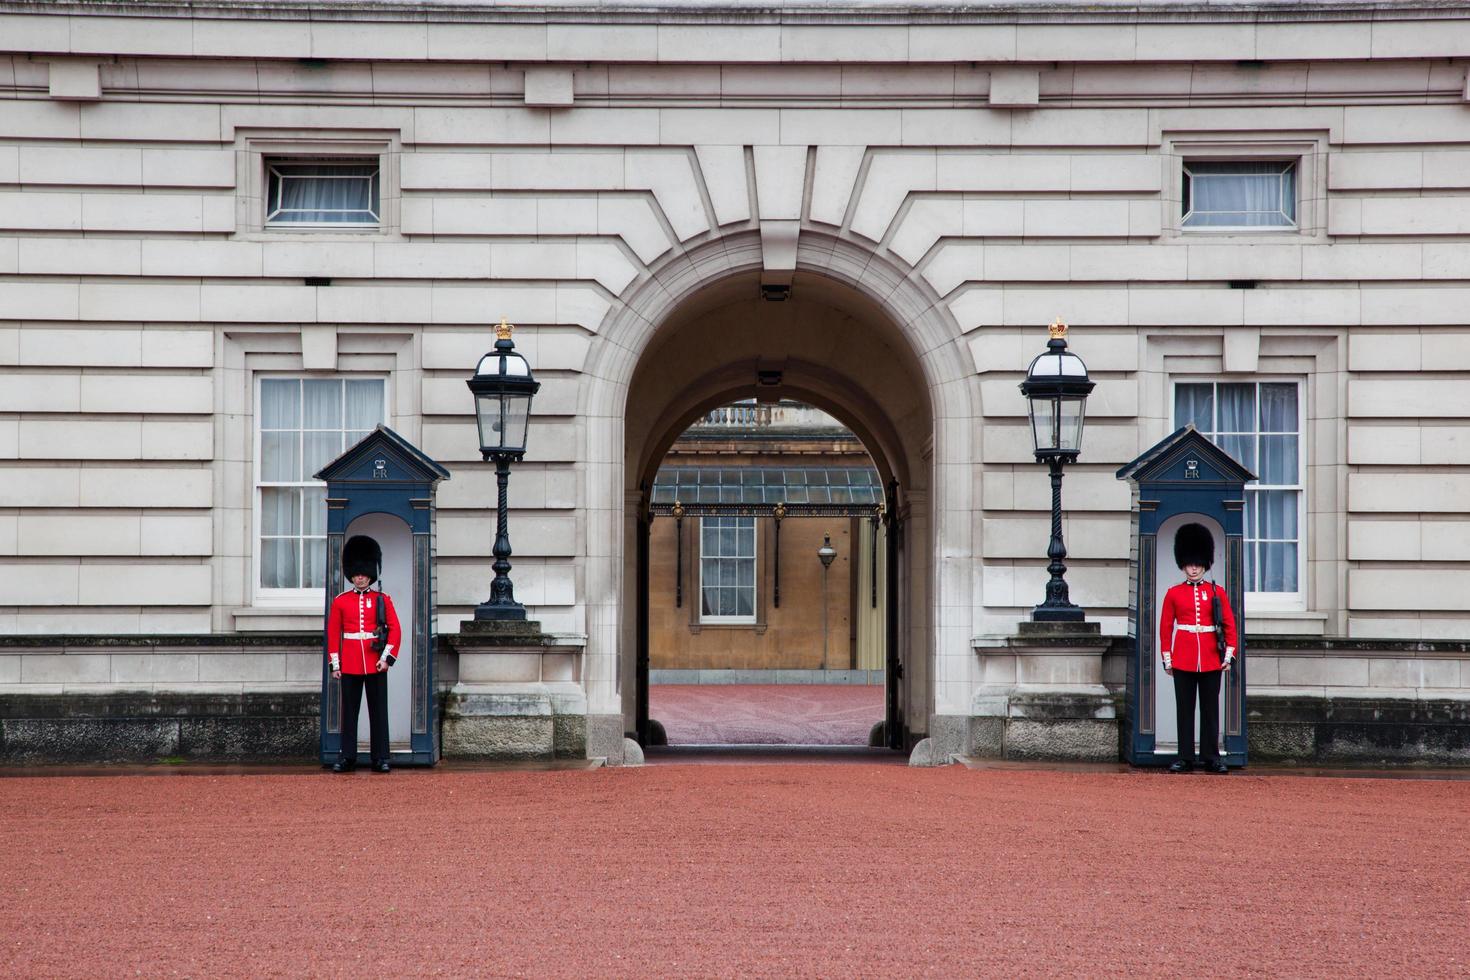 London, England, 2022 - British Royal guards guard the entrance to Buckingham Palace on May 17, 2013 photo